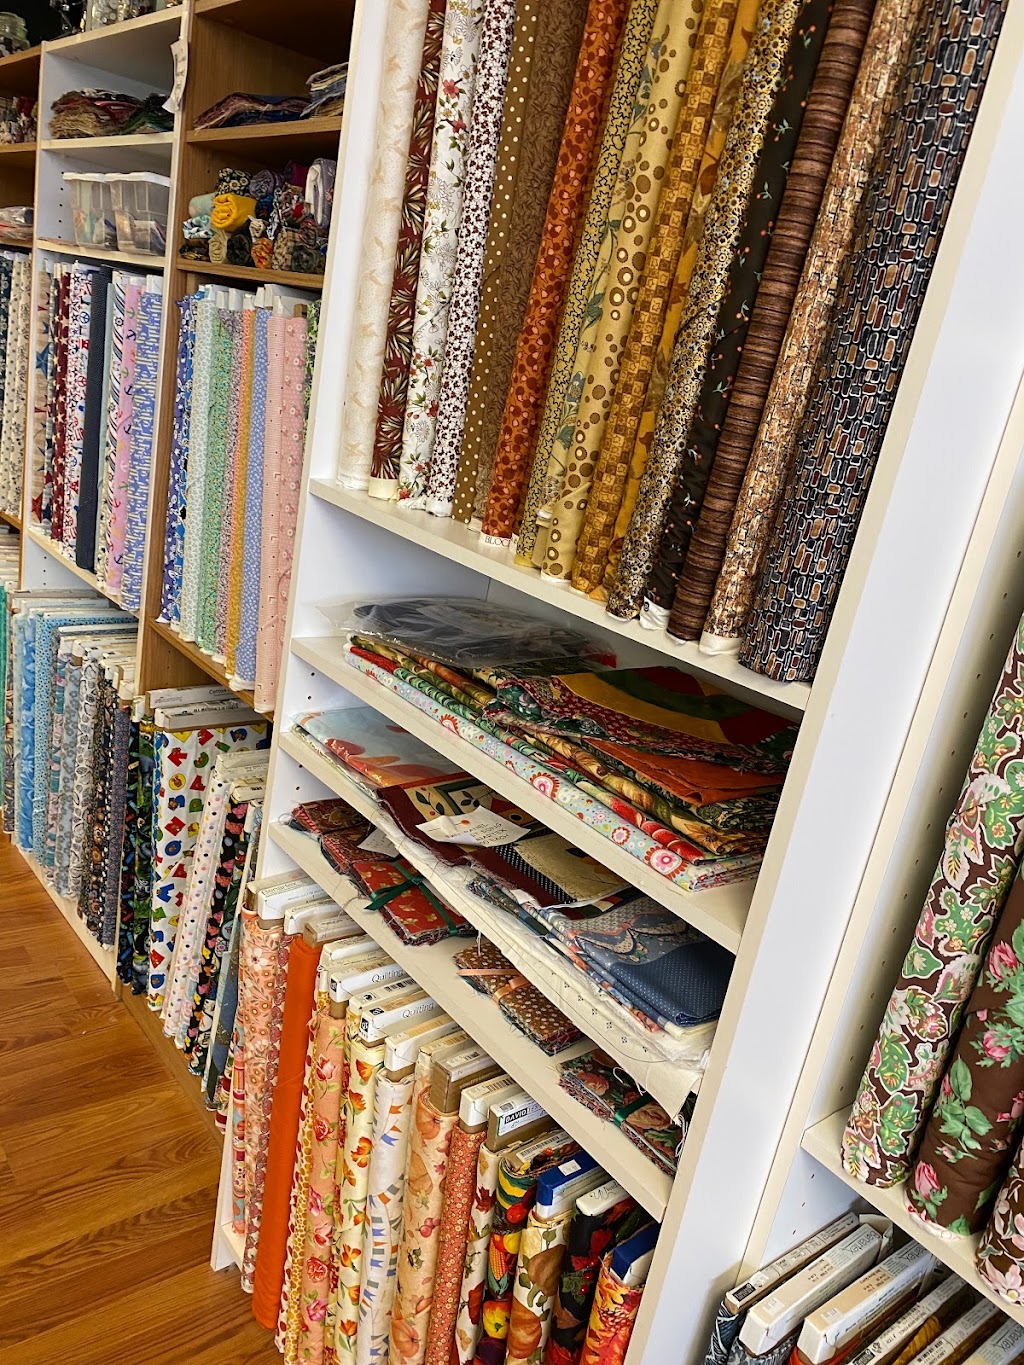 Crafty Fabrics | 750 Mantoloking Rd, Brick Township, NJ 08723 | Phone: (732) 920-6220